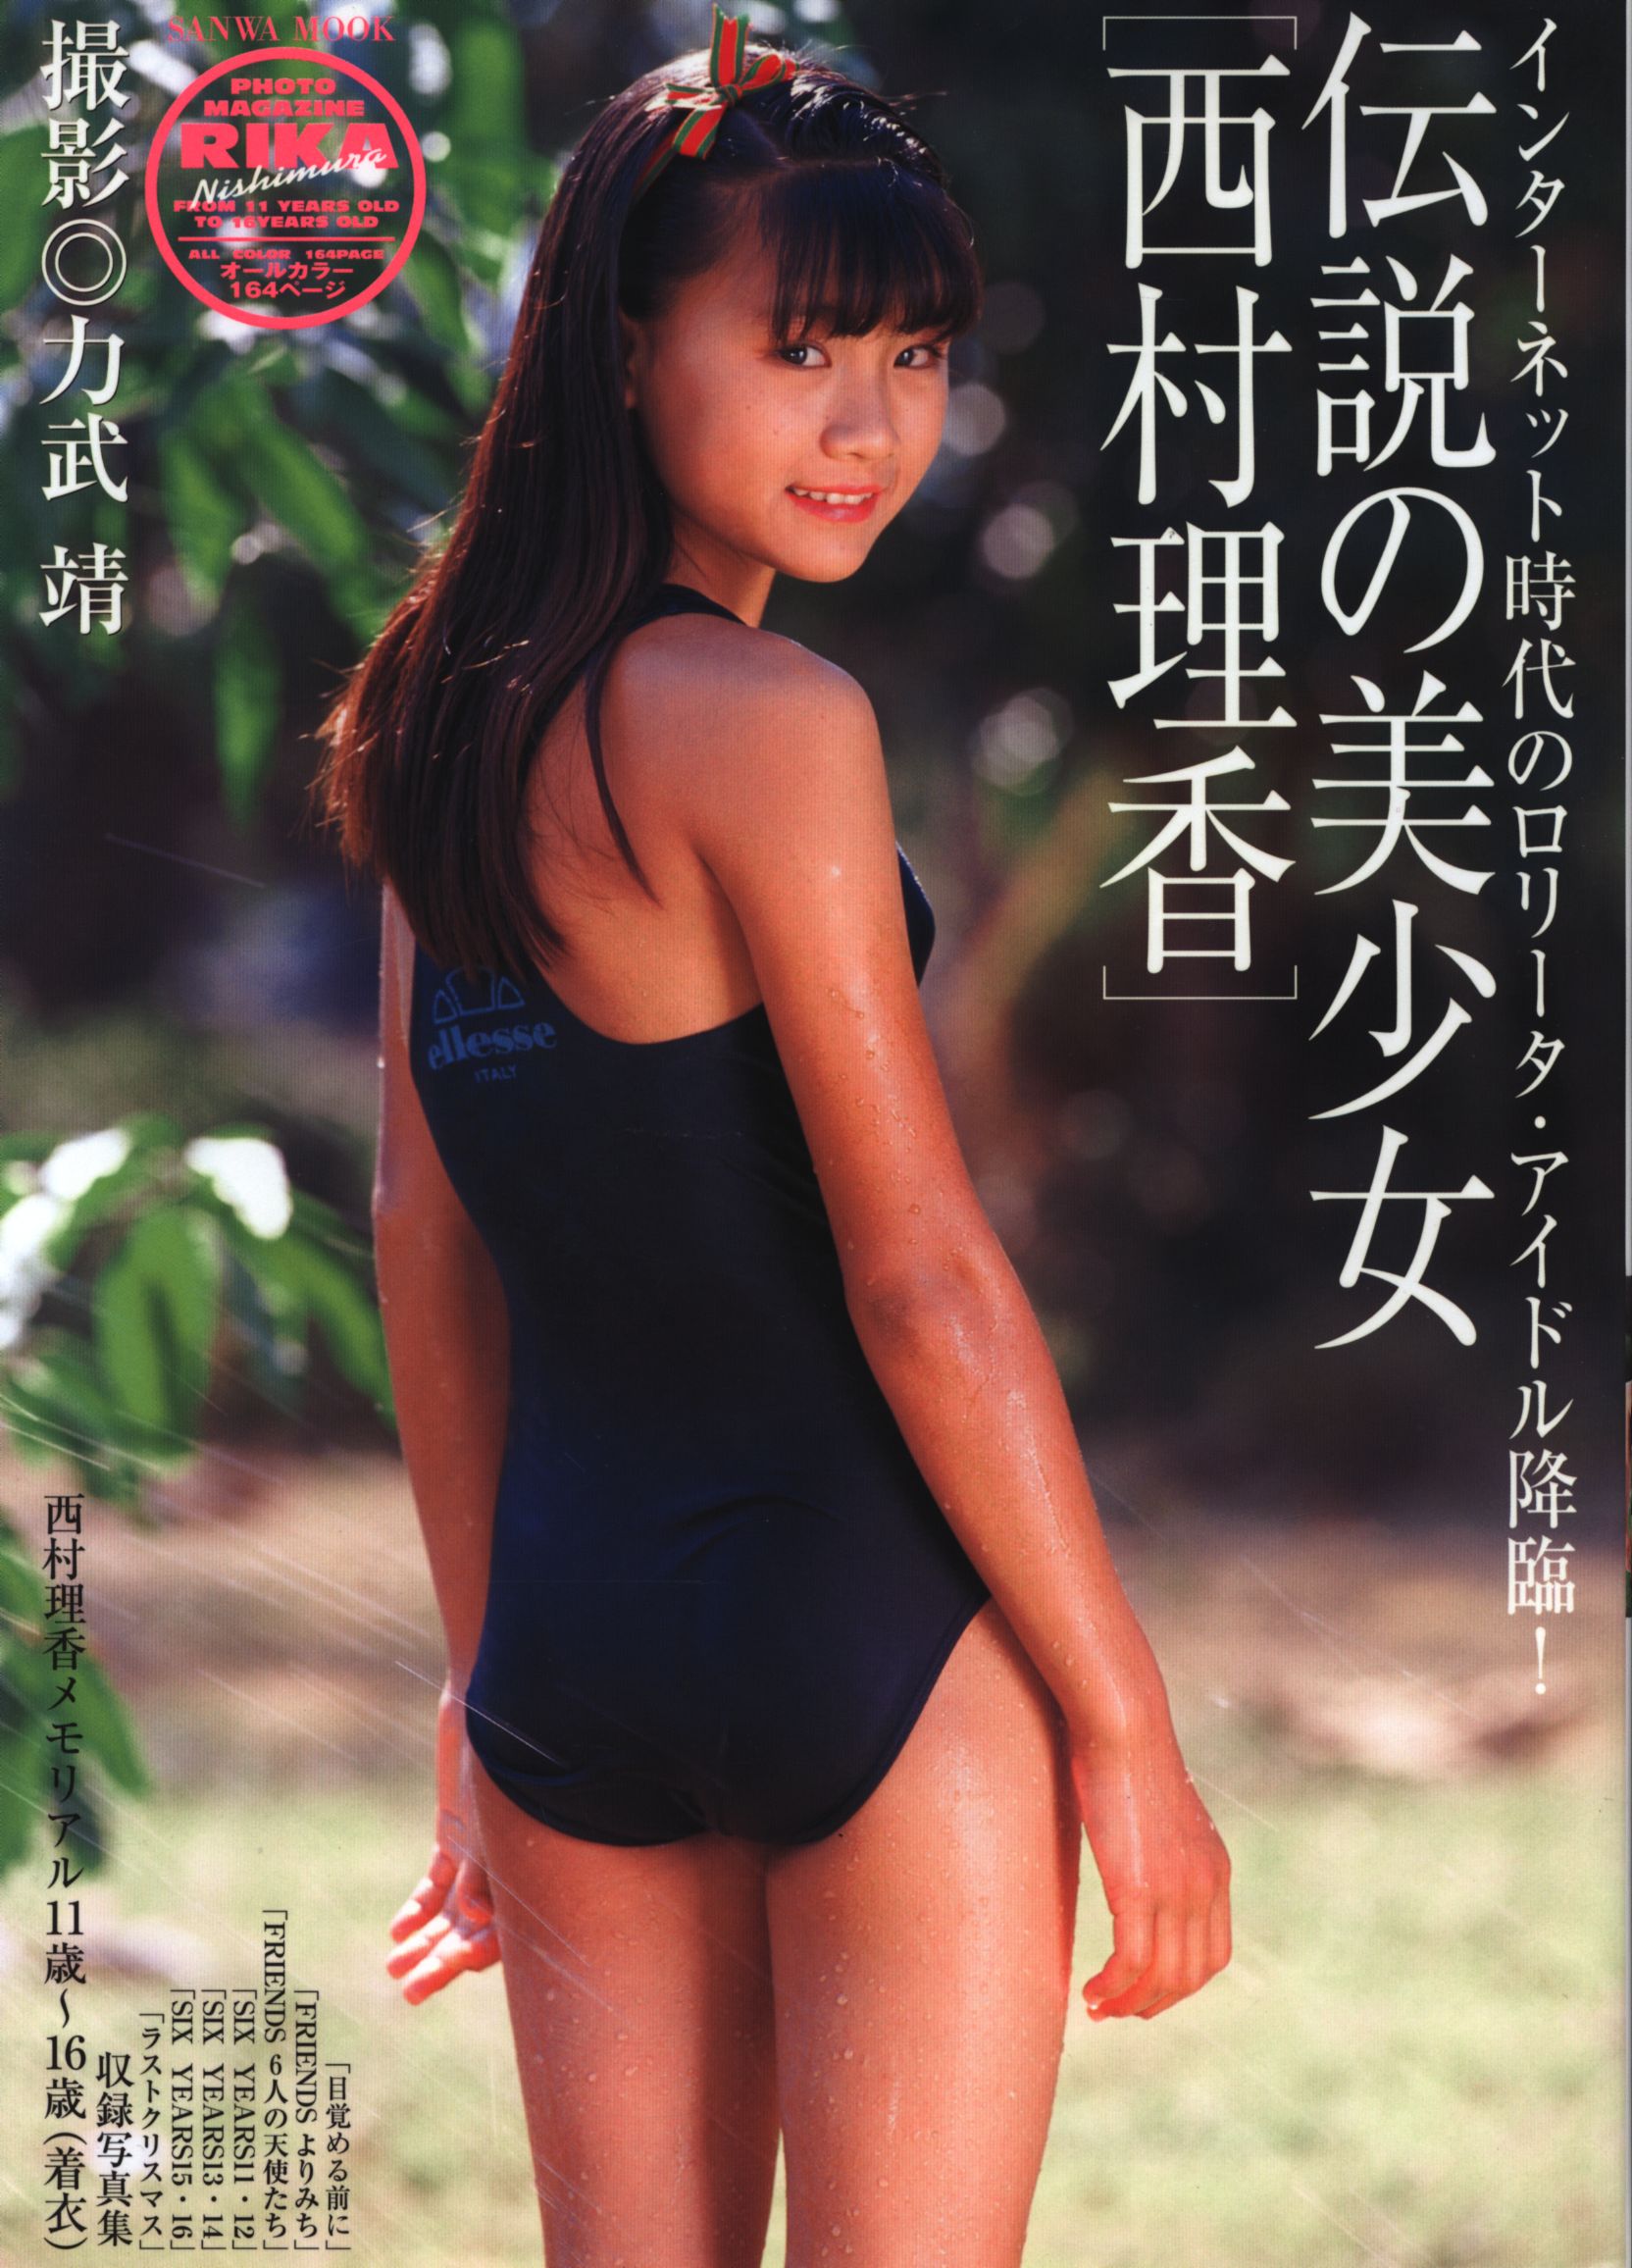 rika nishimura nude 16 Awsome JAV Idol Japan Movies #16 from rika nishimura nude ...